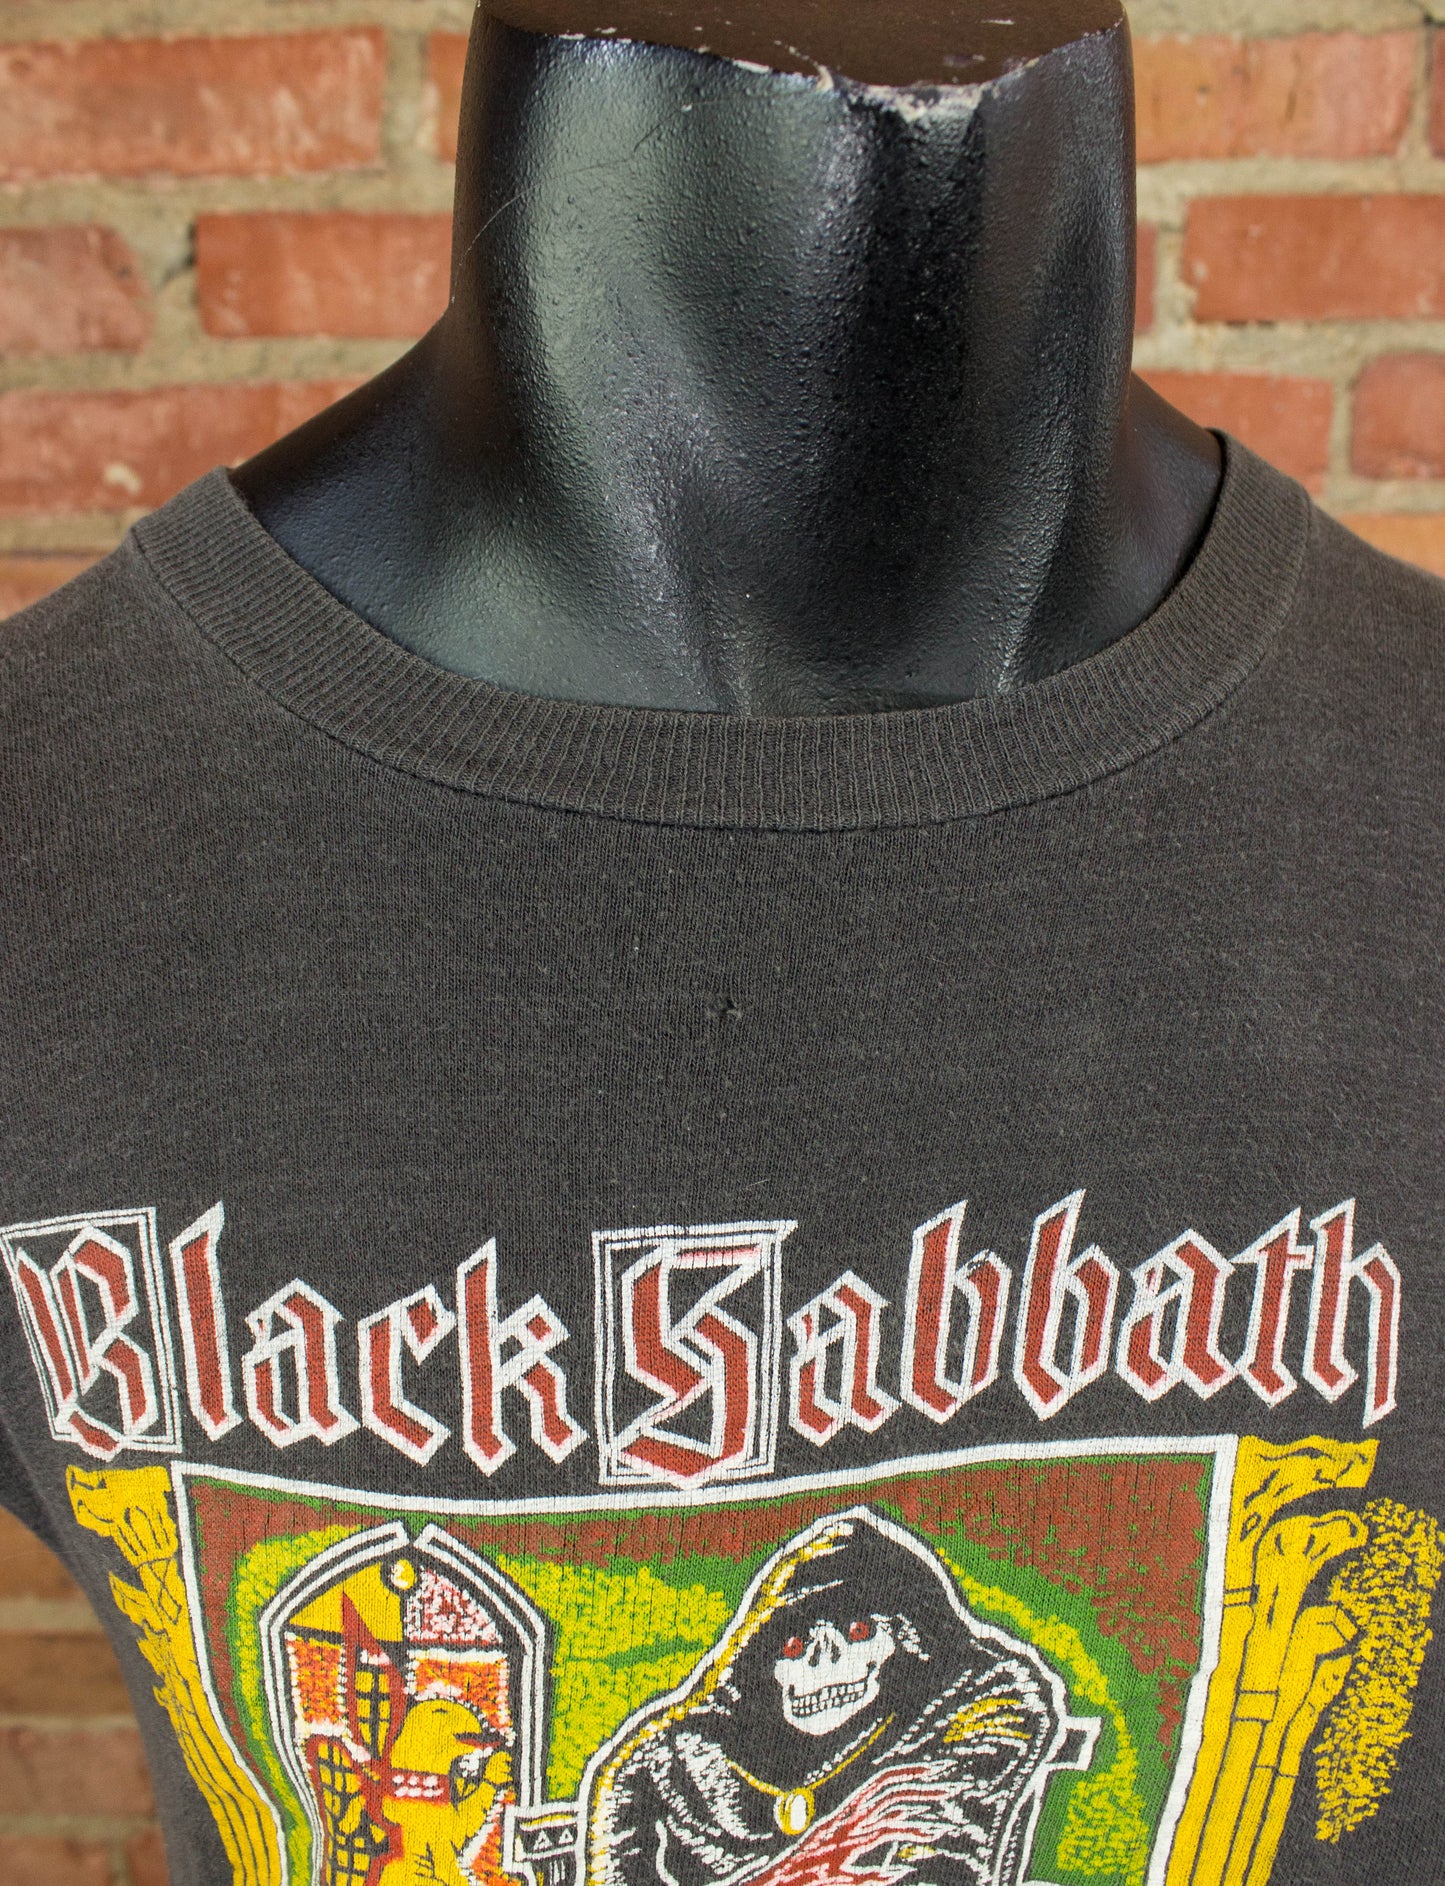 Vintage Black Sabbath Concert T Shirt 70s Reaper 666 Parking Lot Bootleg Black Medium